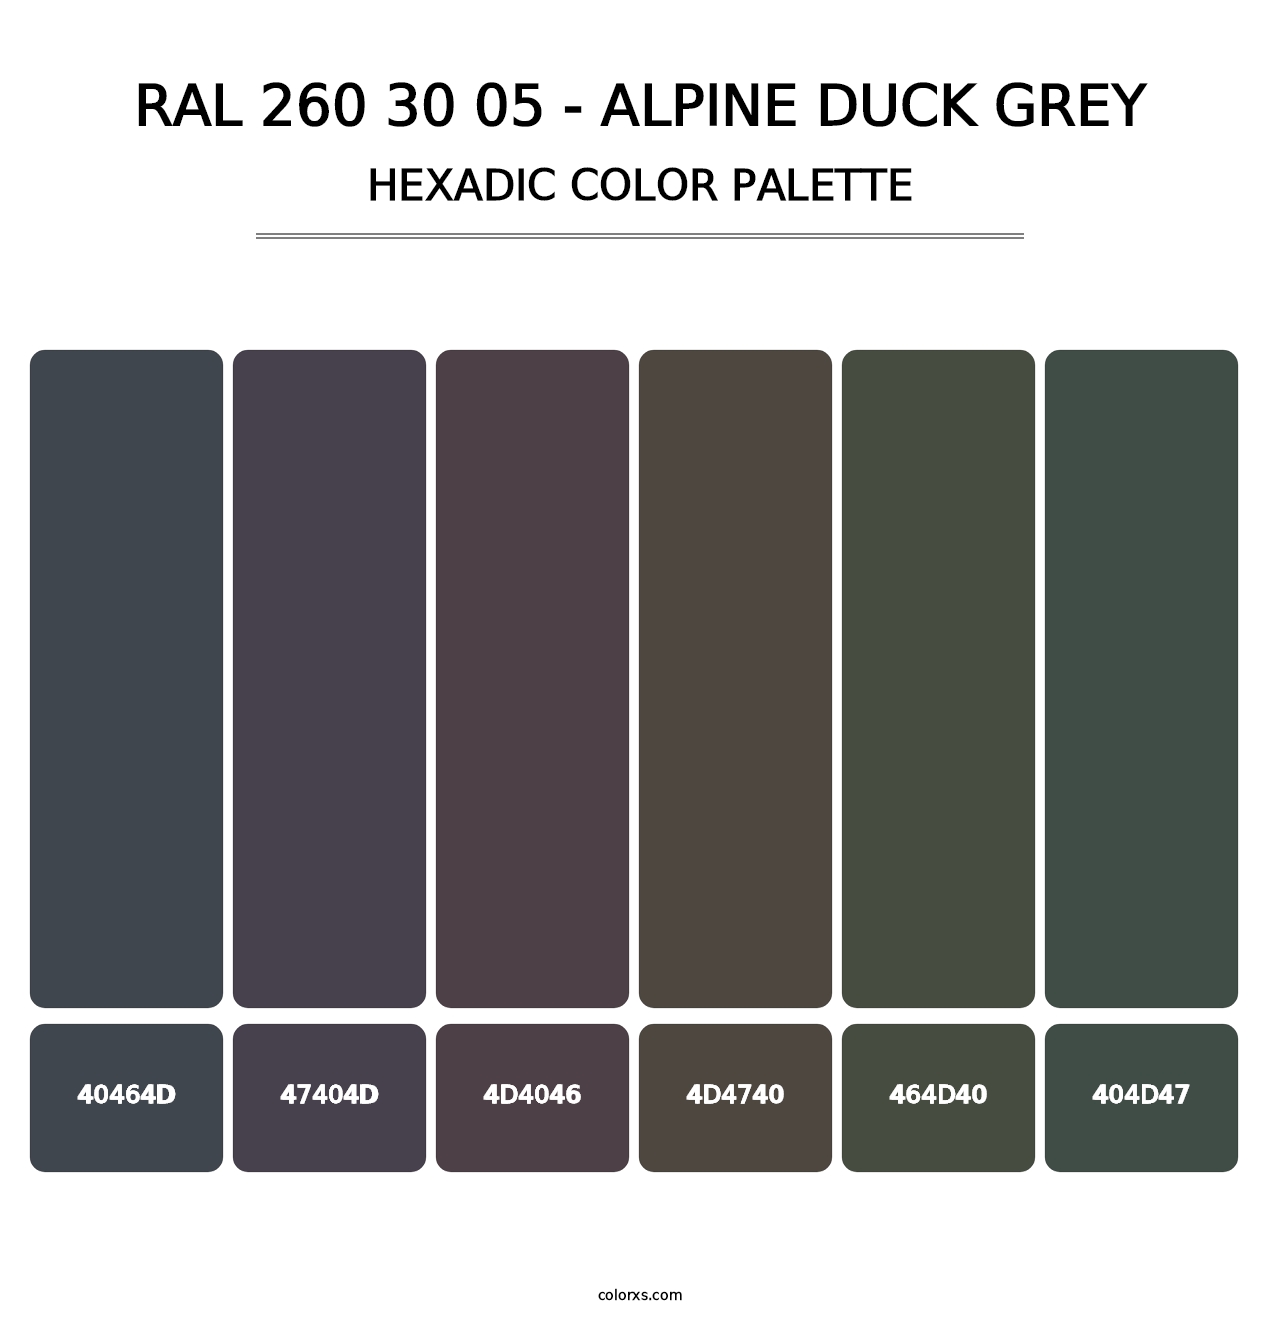 RAL 260 30 05 - Alpine Duck Grey - Hexadic Color Palette